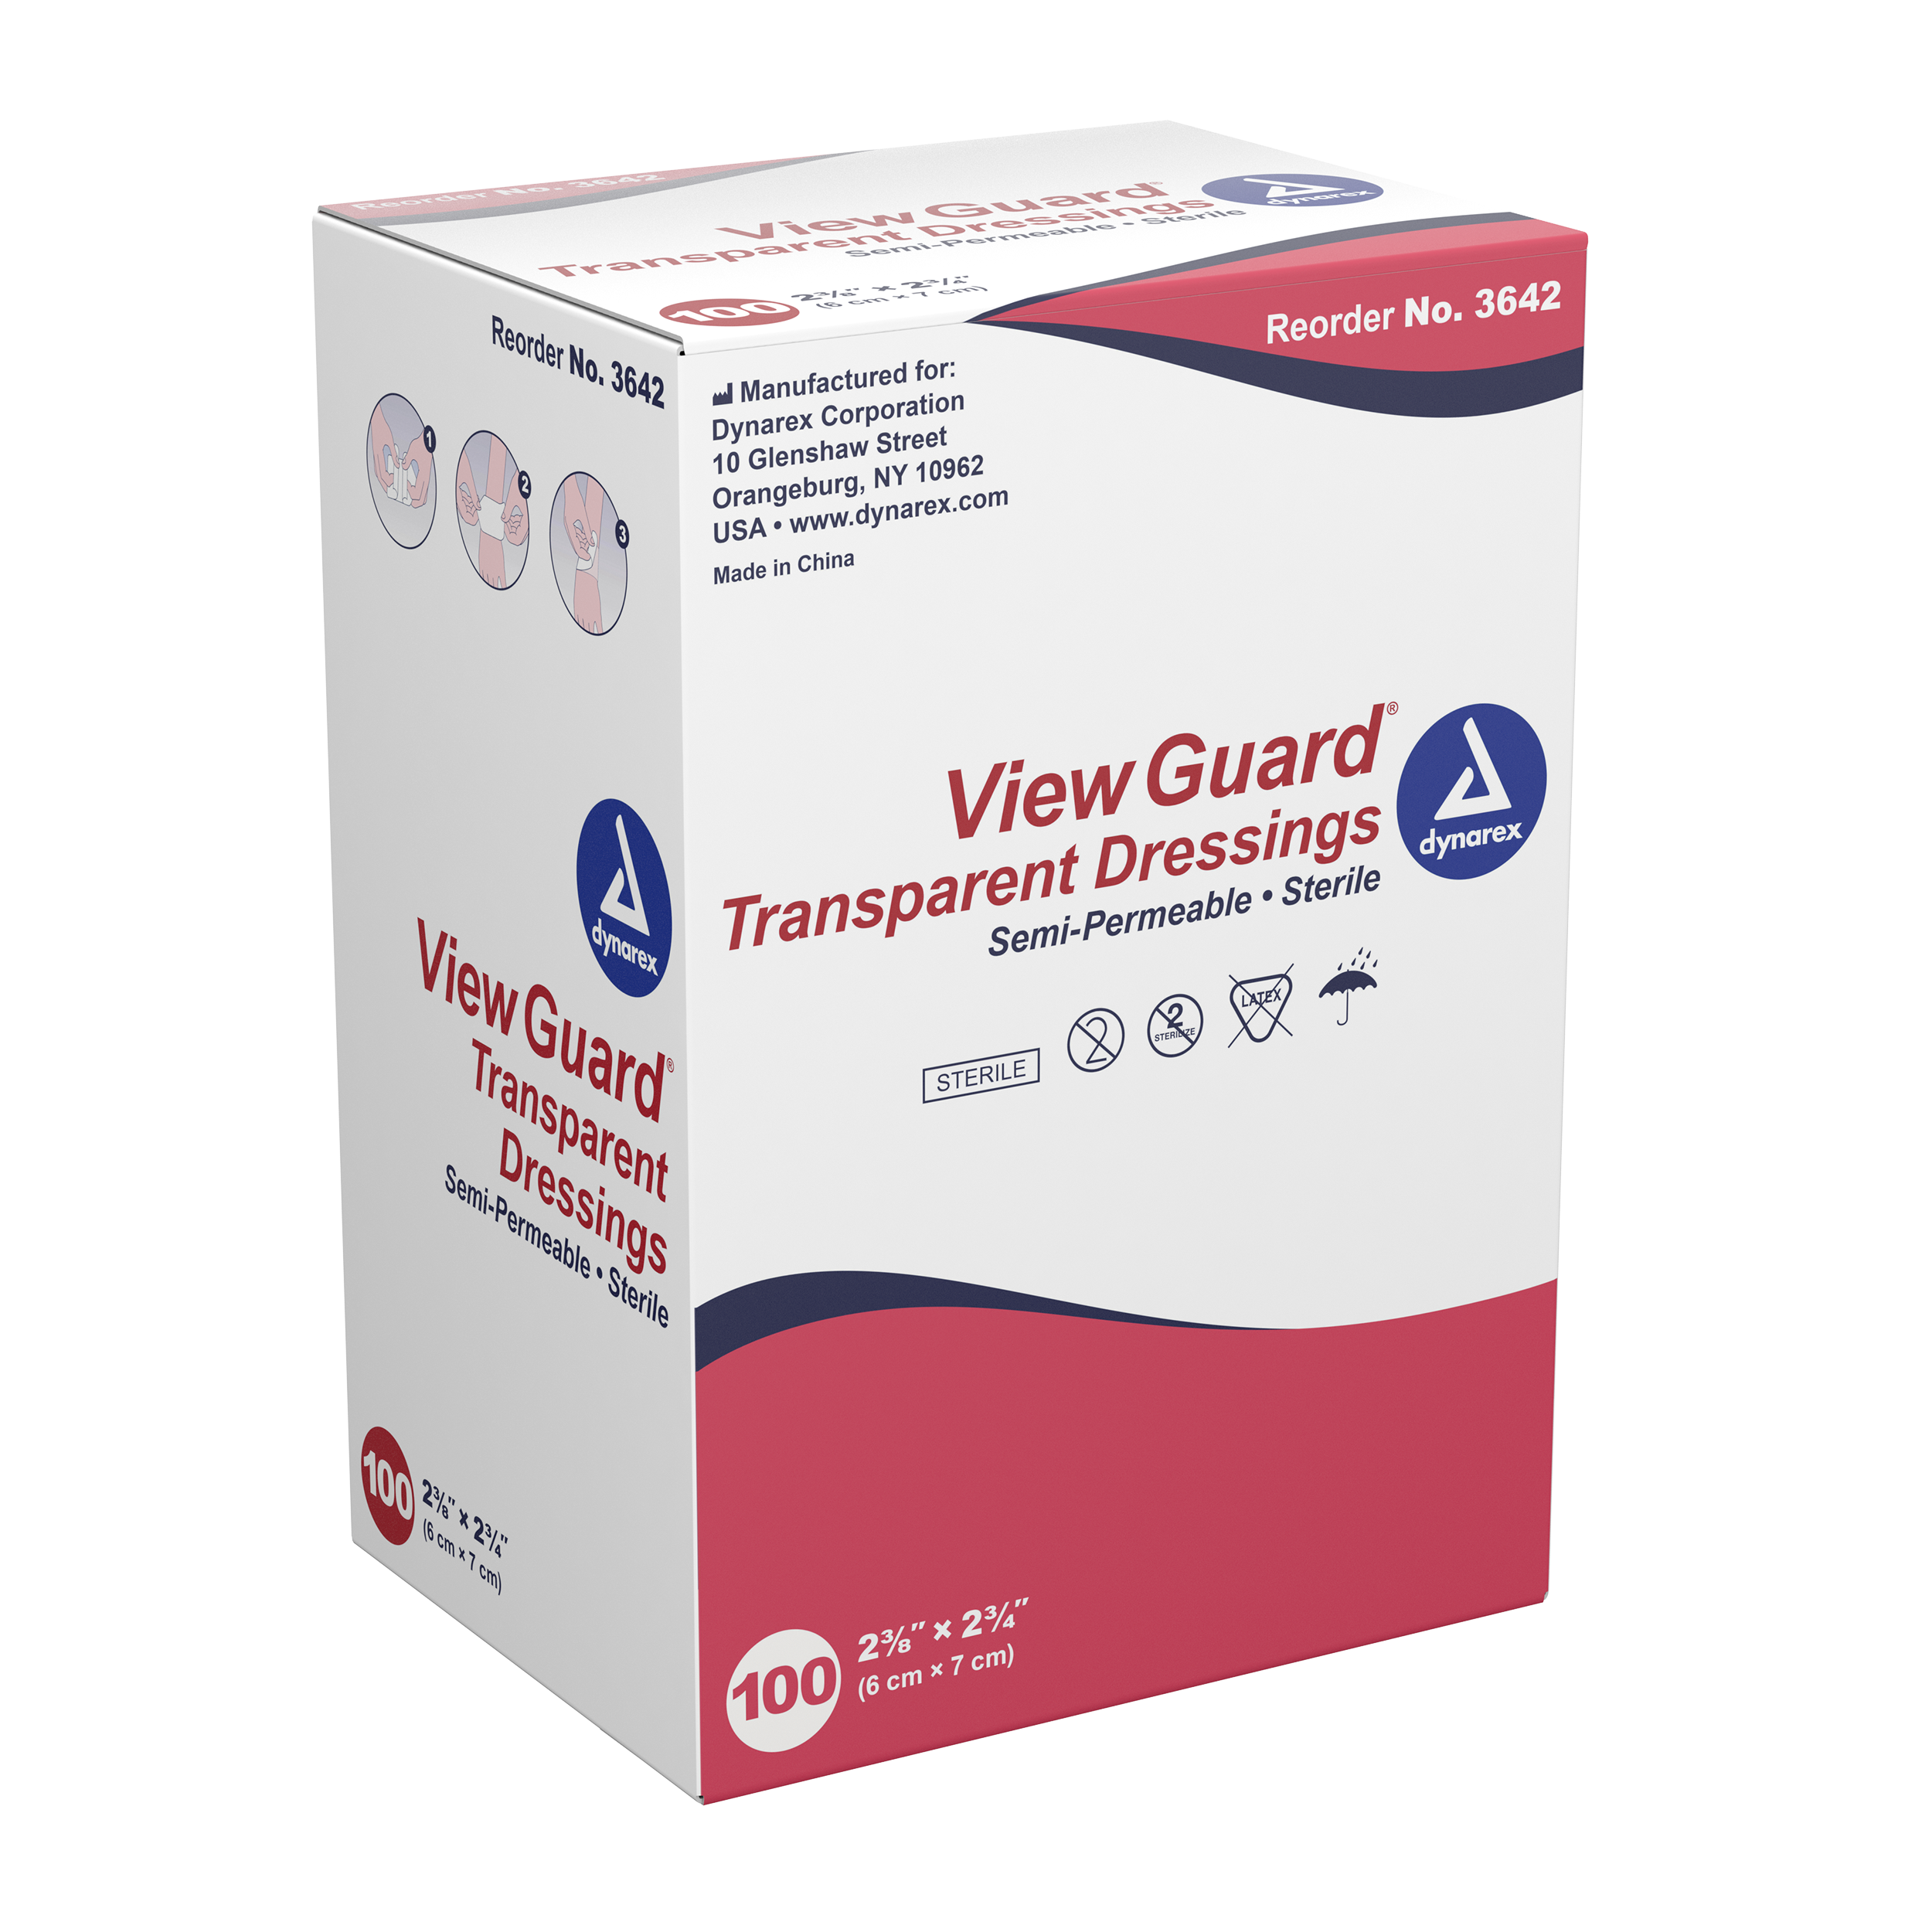 View Guard® Transparent Dressings Sterile 2 3/8″ X 2 3/4″